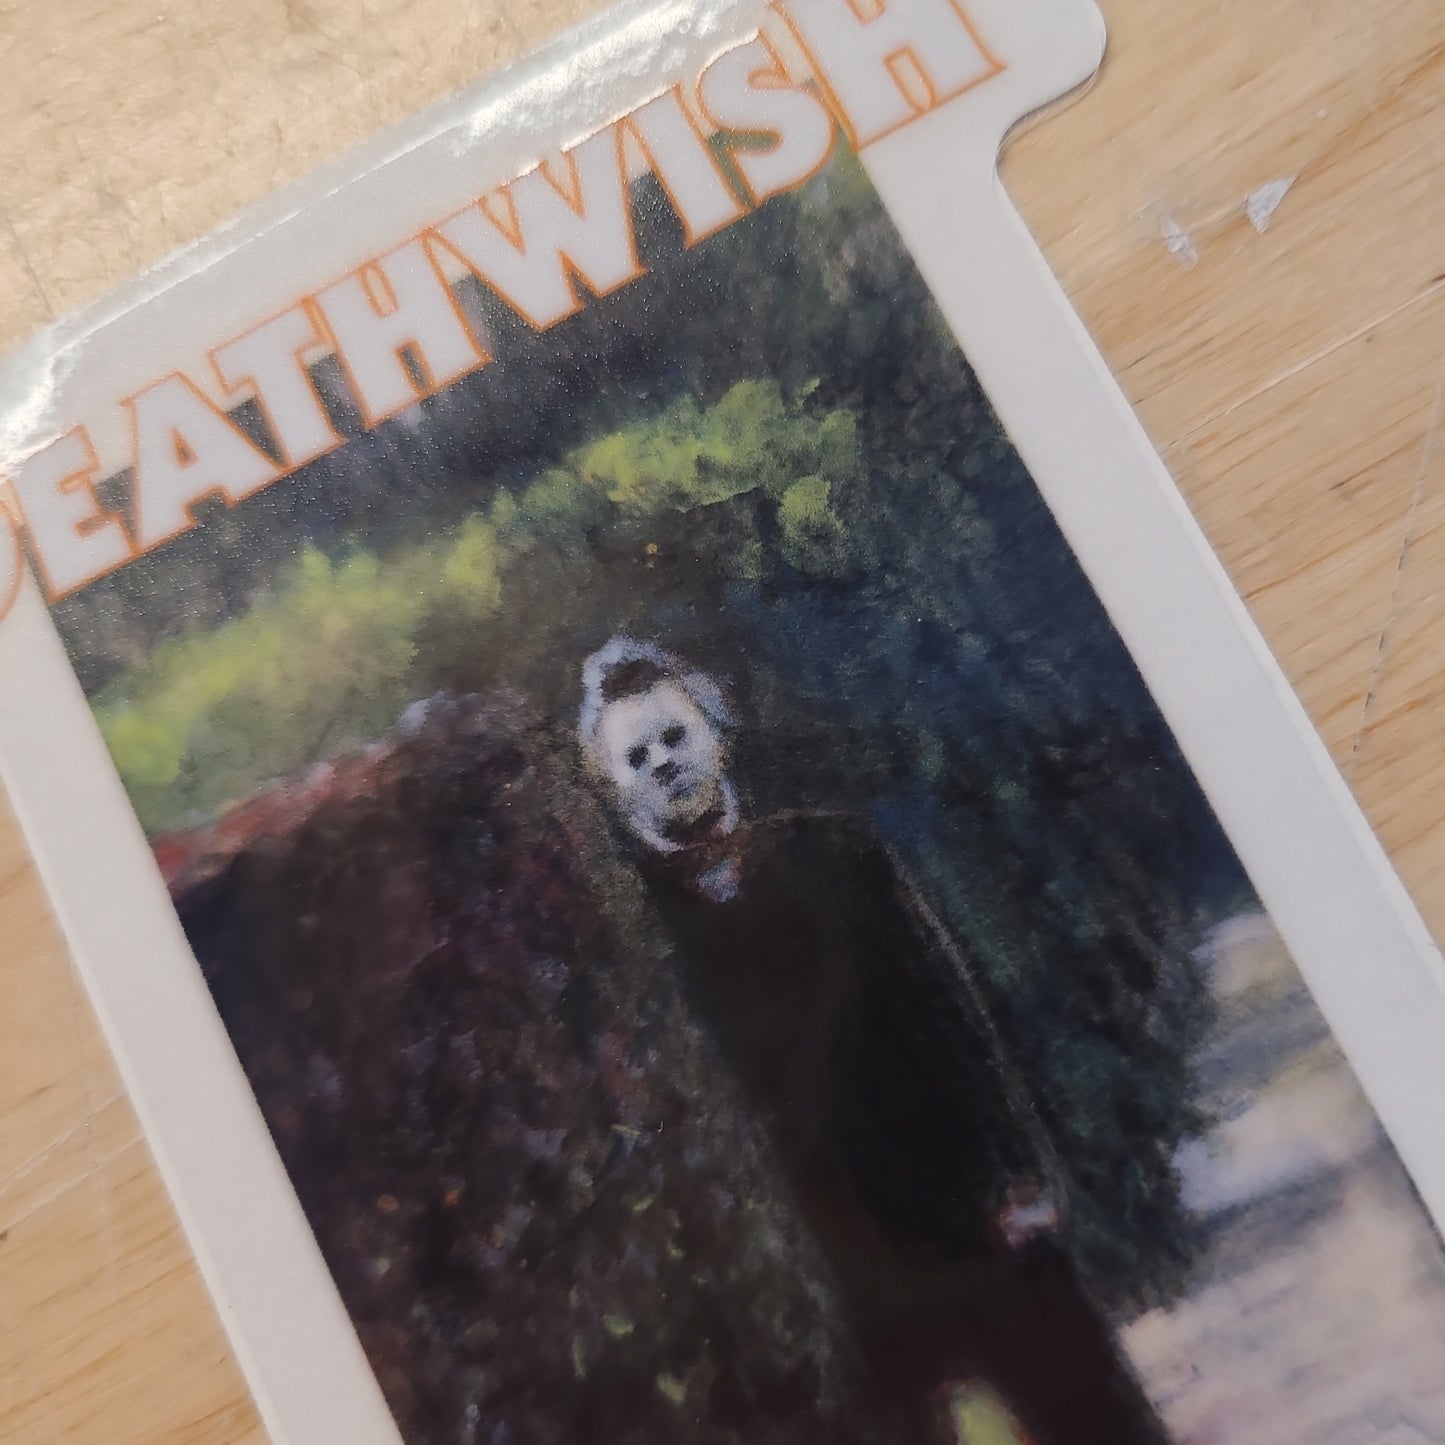 Deathwish - One Off Stickers